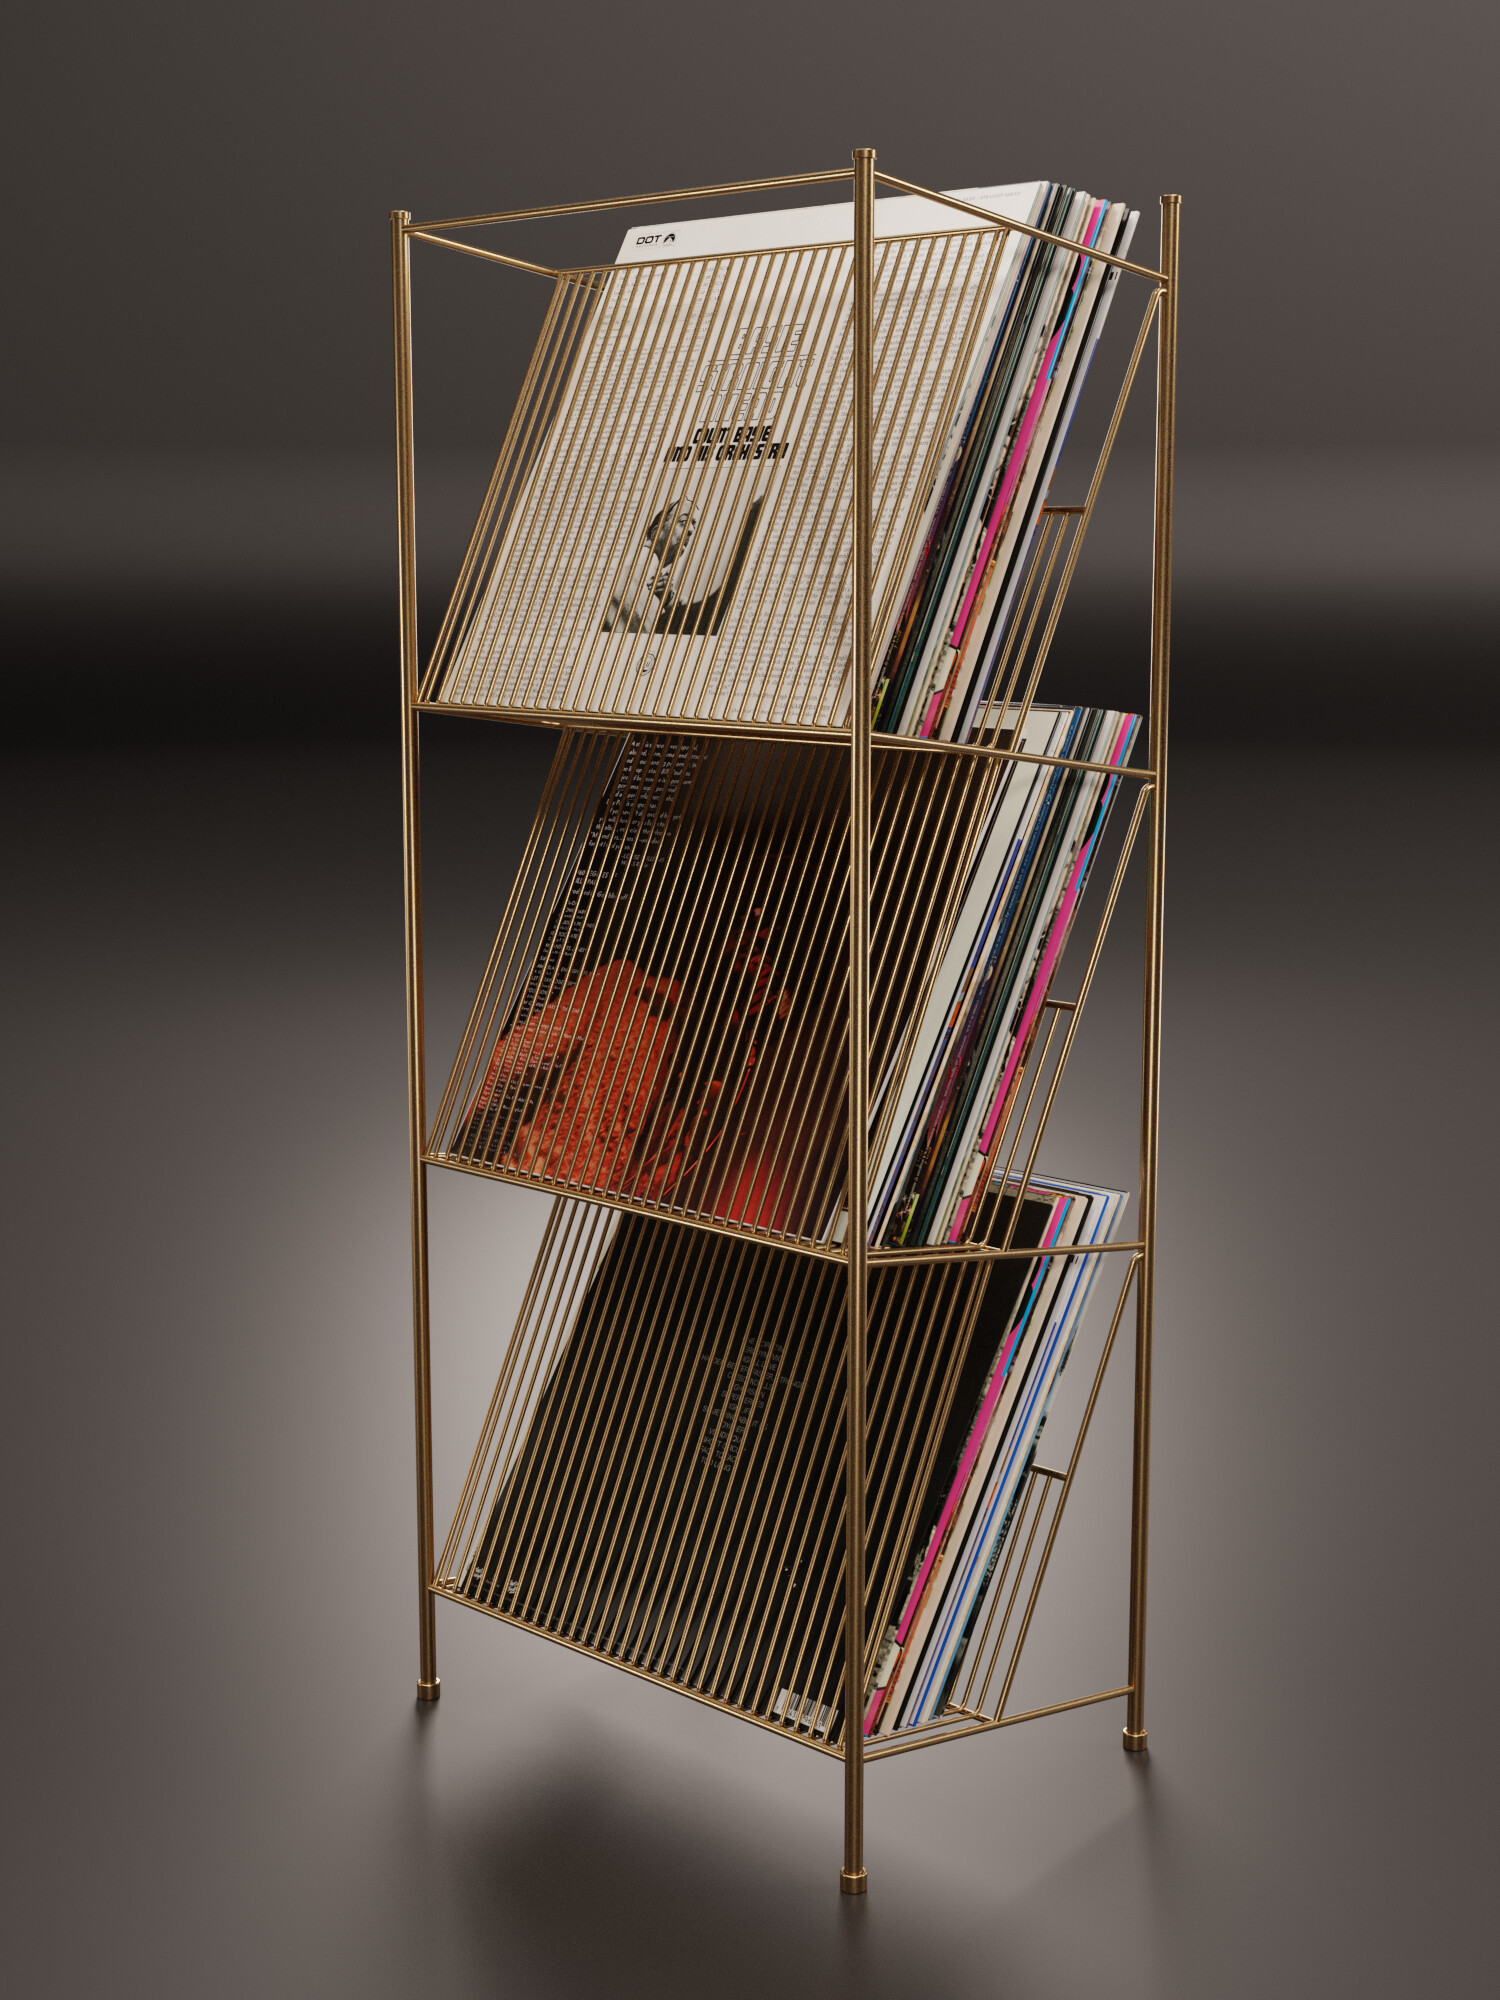 Corner Store Vinyl Storage Rack